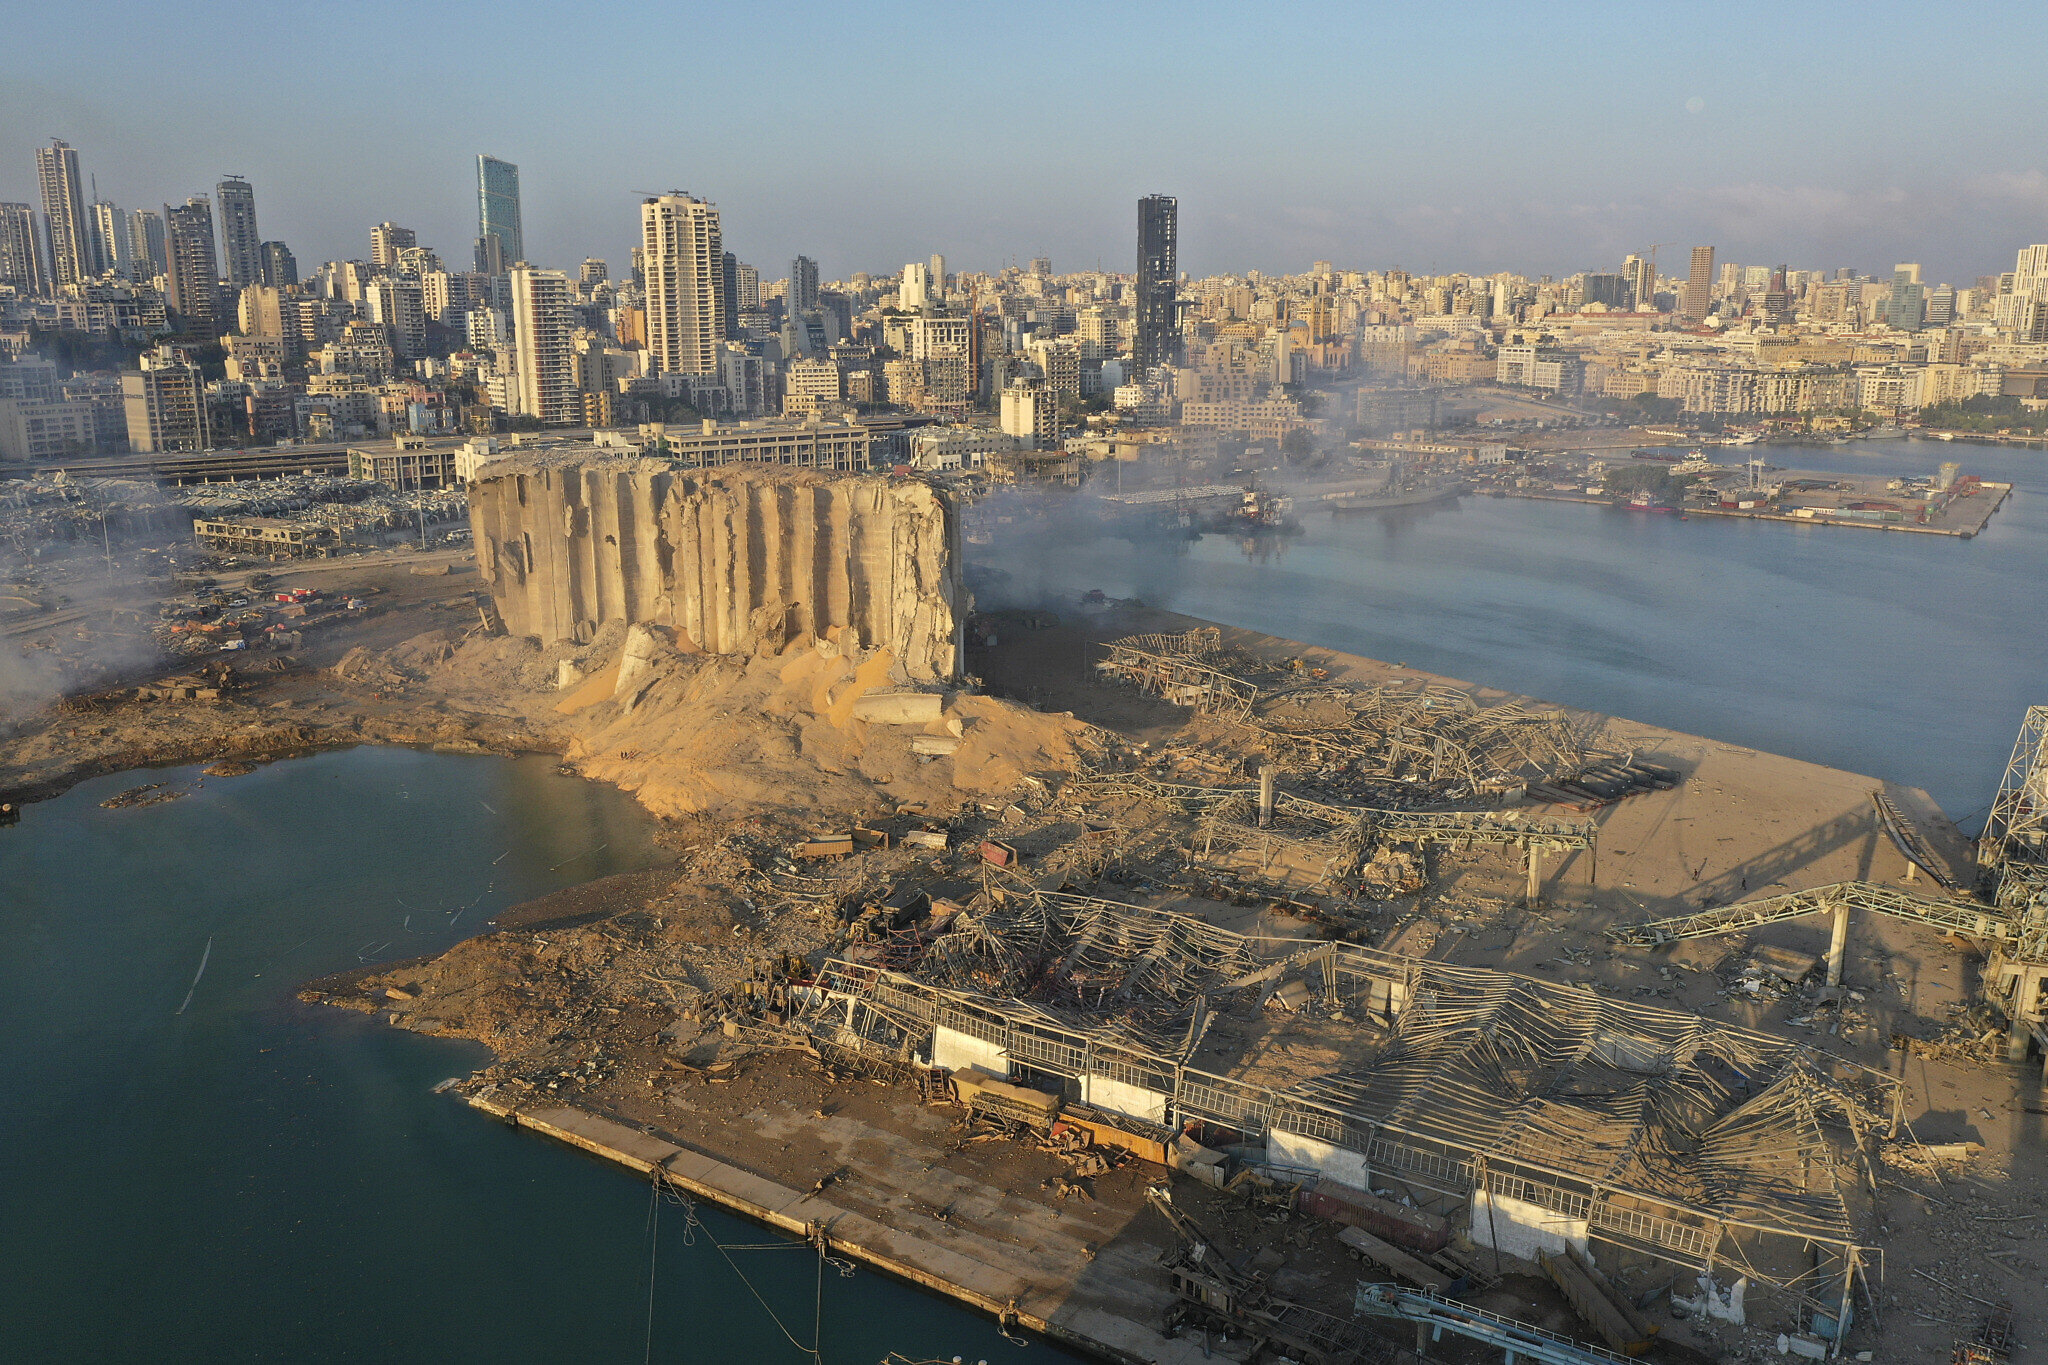 More information about "Η έκταση της καταστροφής από την έκρηξη στη Βηρυτό"